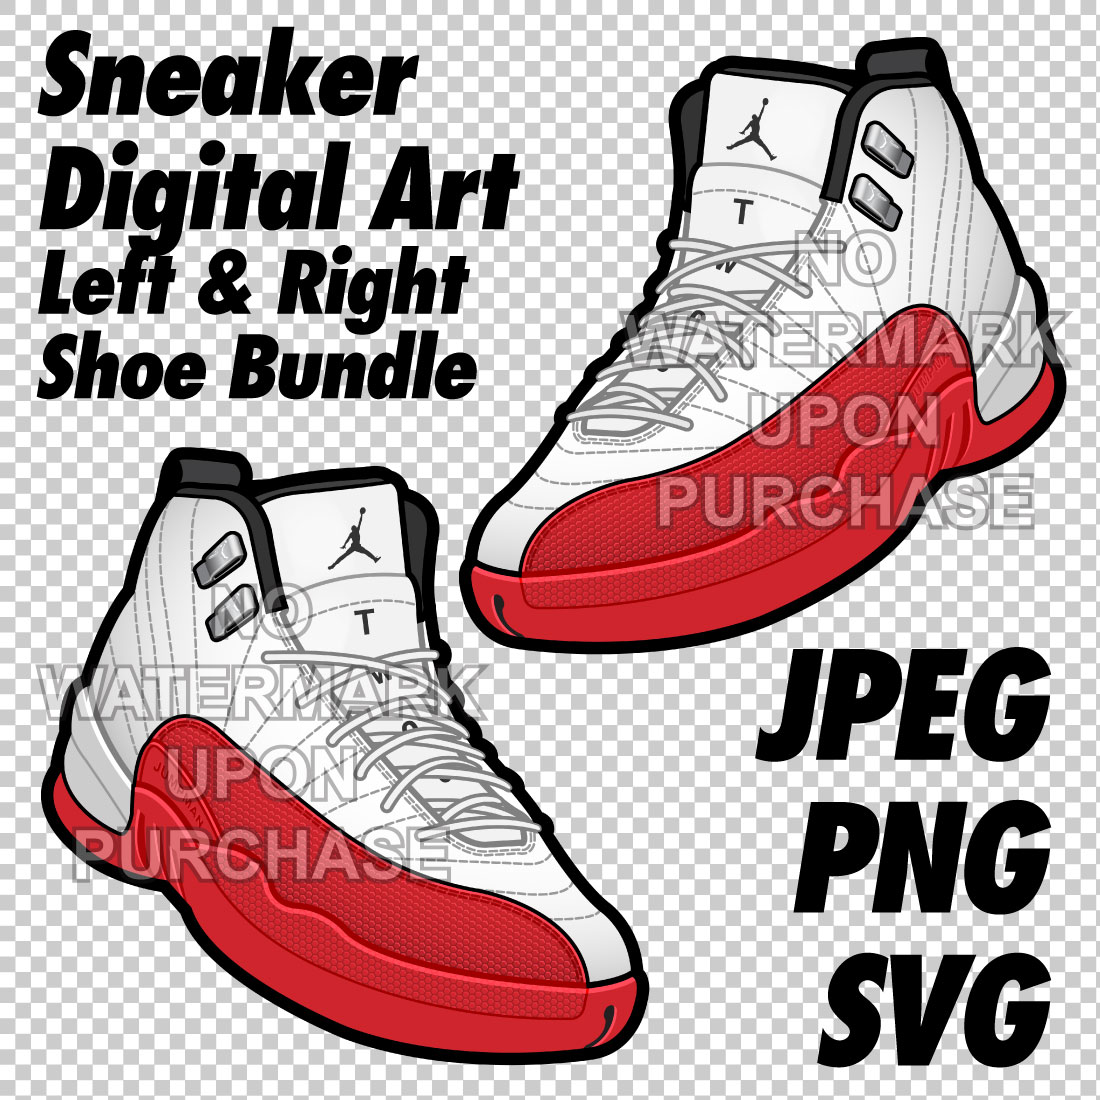 Air Jordan 12 Cherry JPEG PNG SVG Sneaker Art Right & Left shoe bundle with lace swap Digital Download cover image.